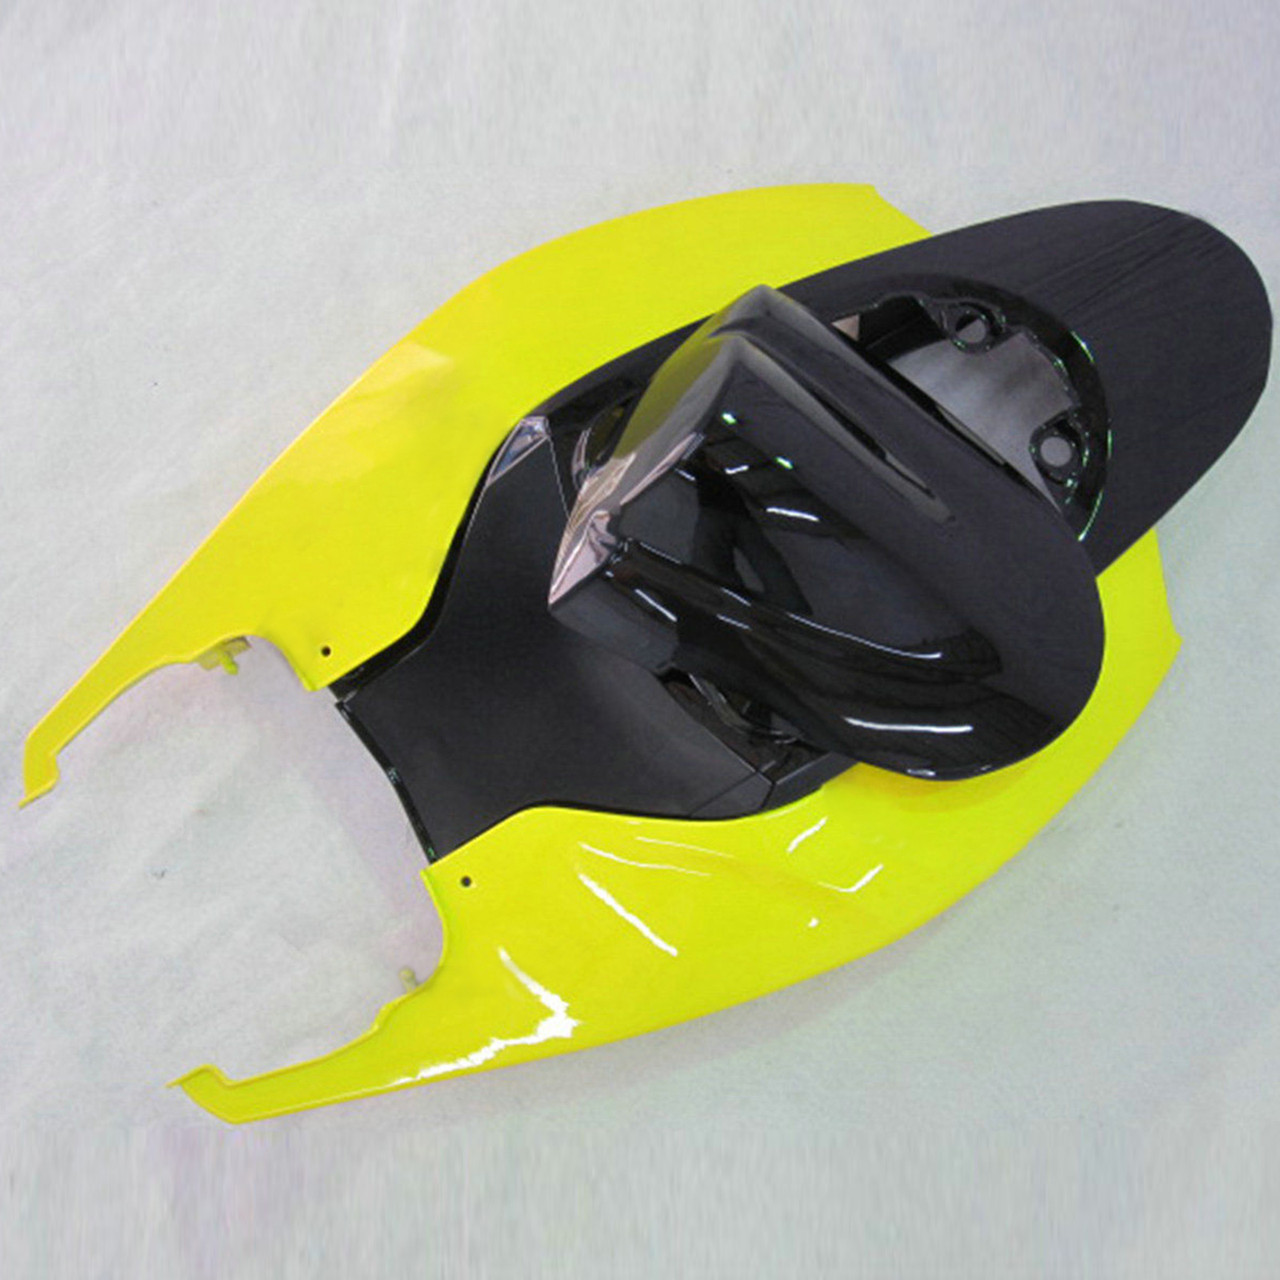 Suzuki GSXR 600 750 2006-2007 Yellow Black Injection Body Cover Fairing Kits